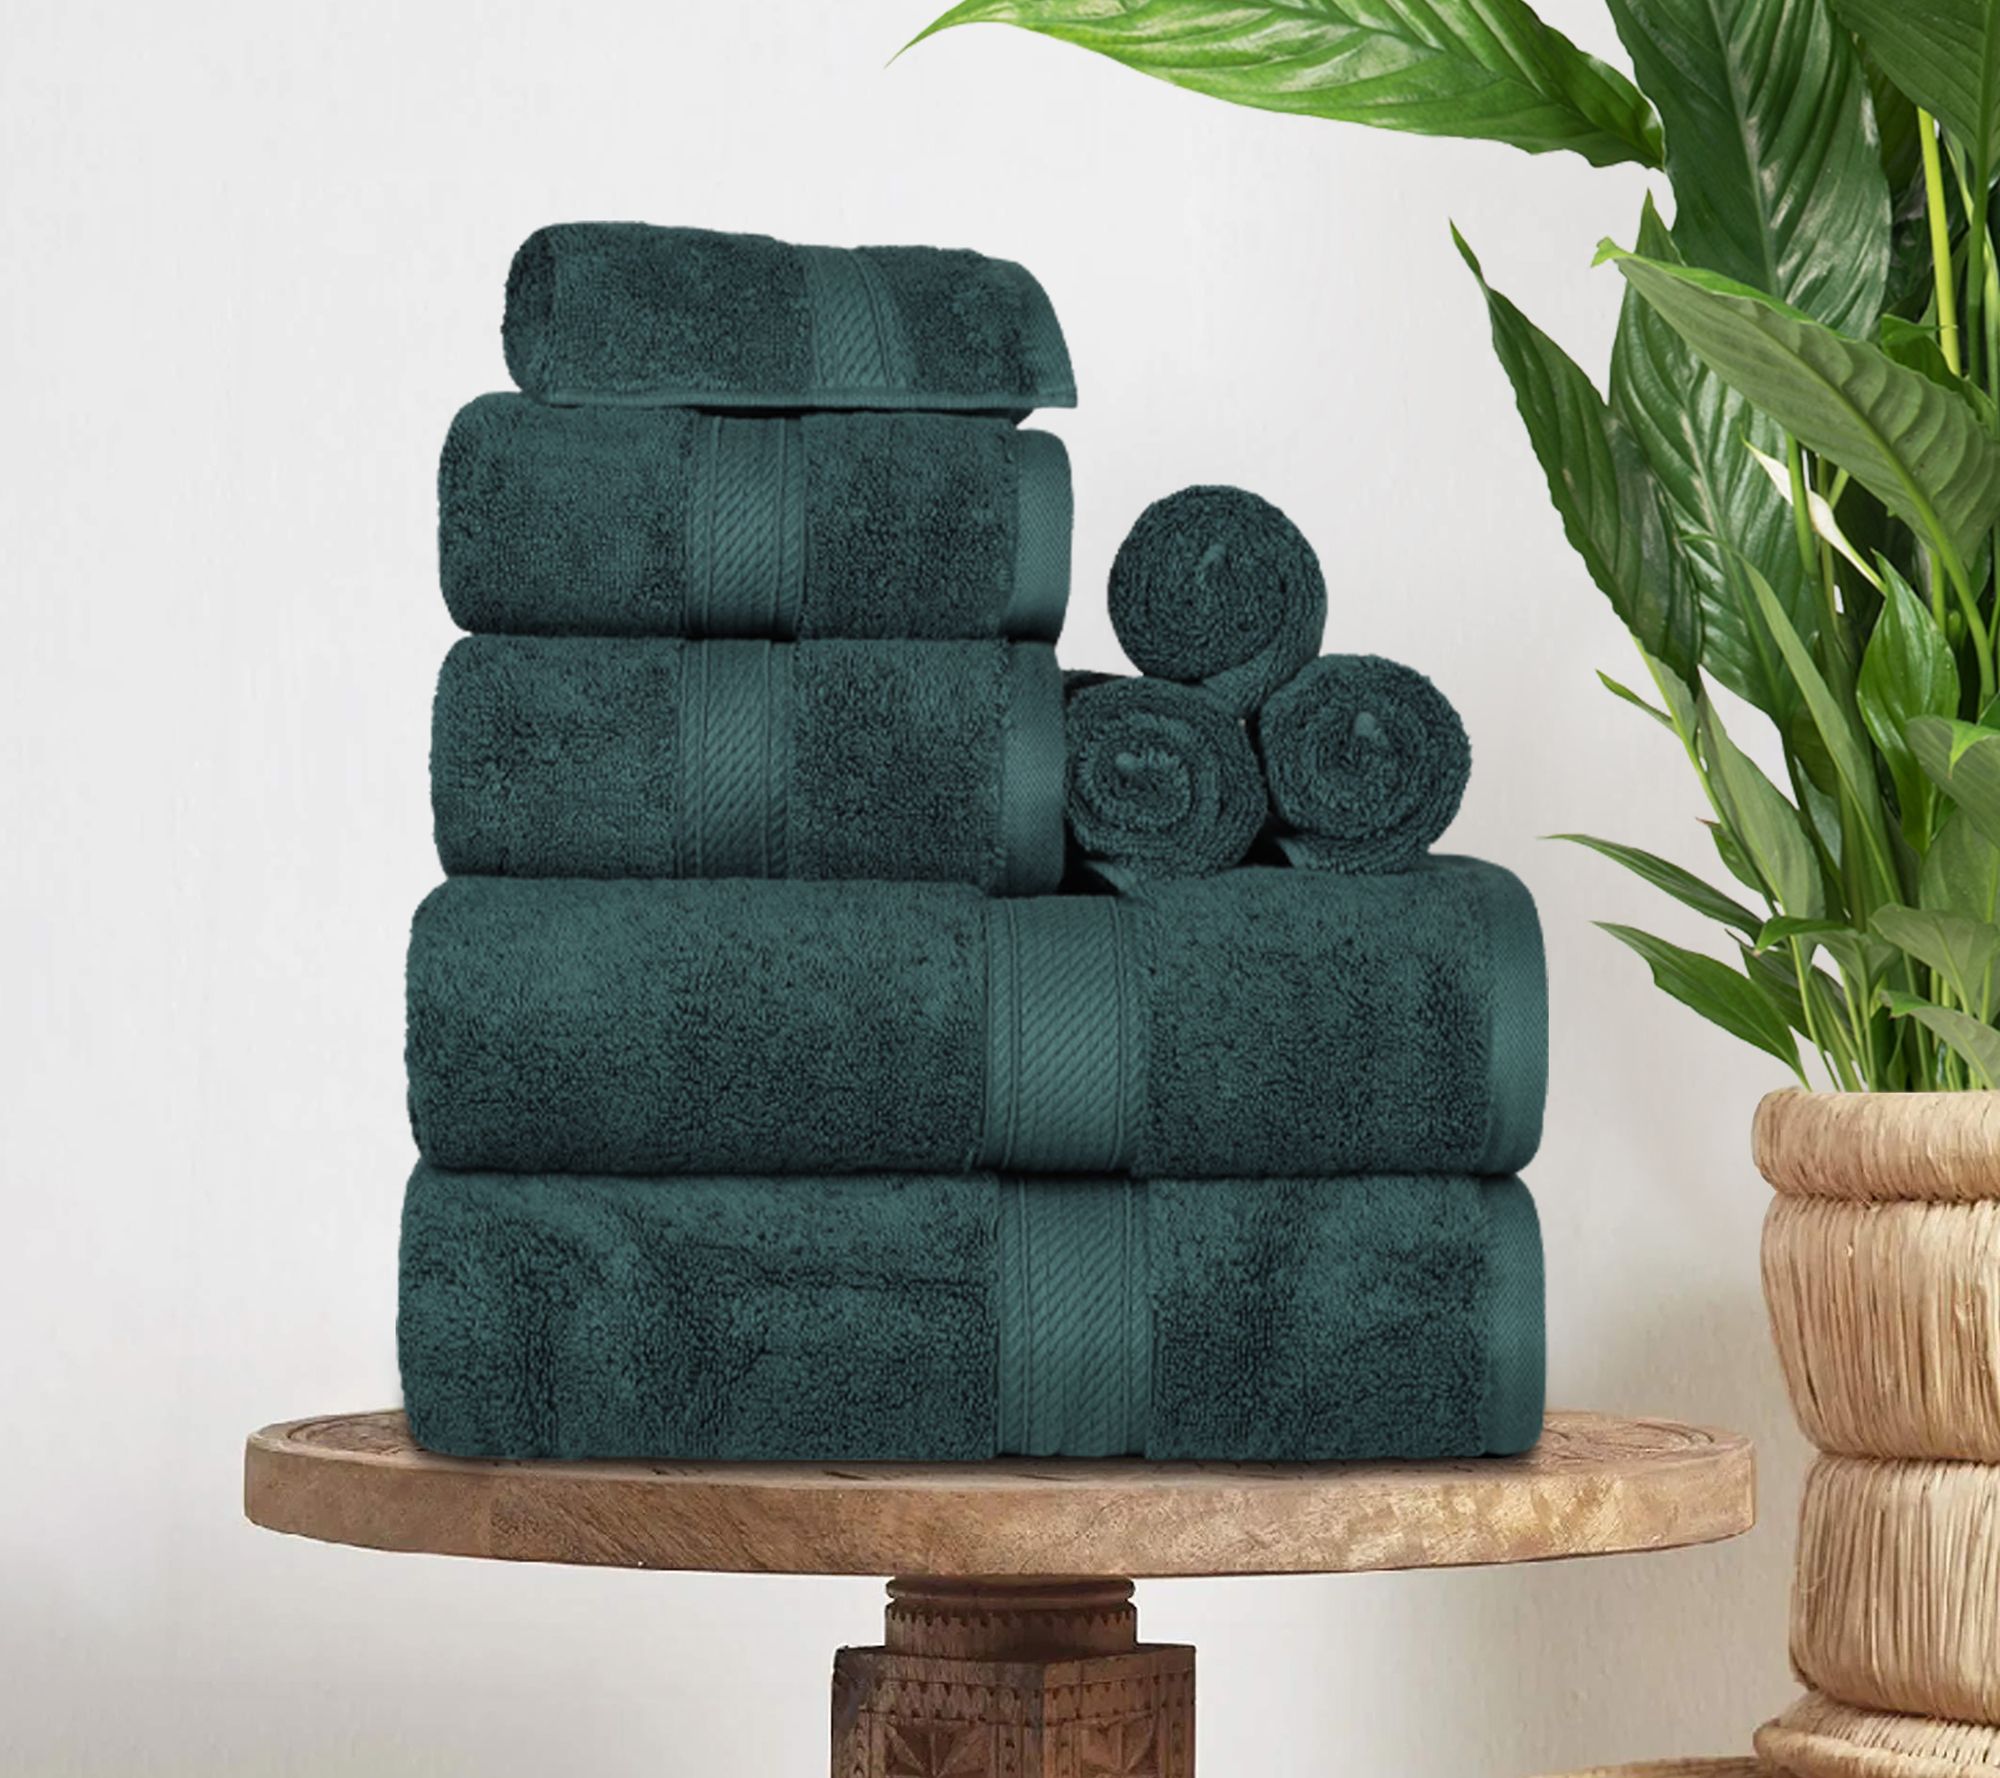 SUPERIOR 4-piece Egyptian Cotton Bath Towel Set